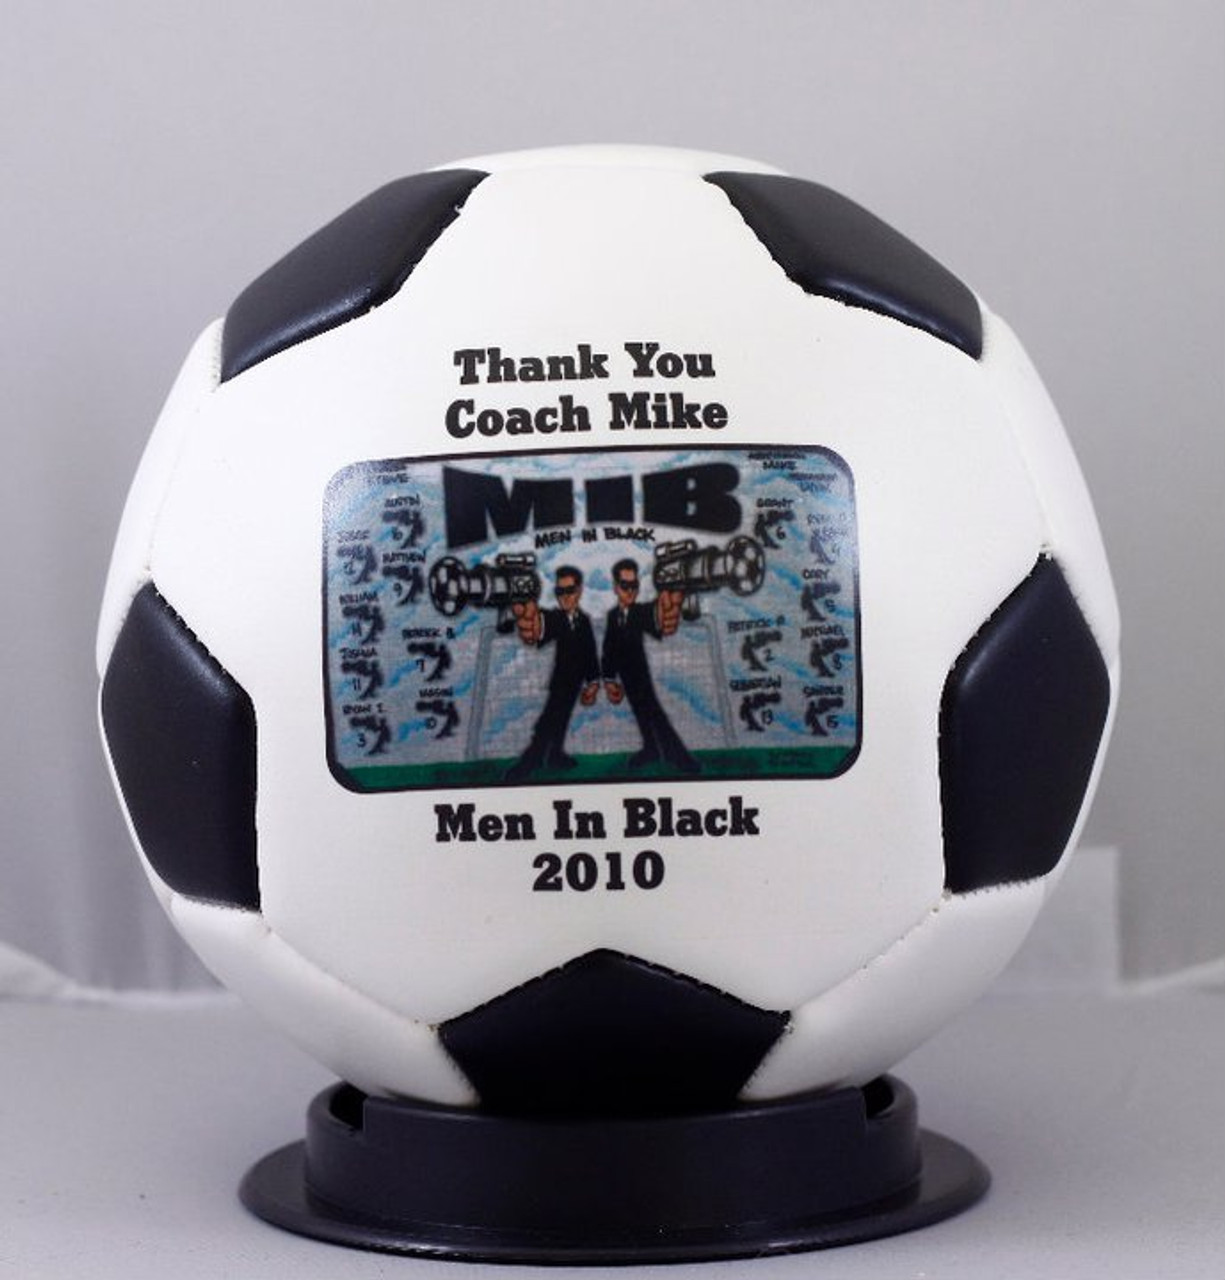 4 Foam Mini Soccer Balls - Custom printed 4 inch Foam Mini-Soccer Balls  with your logo, graphic or message 